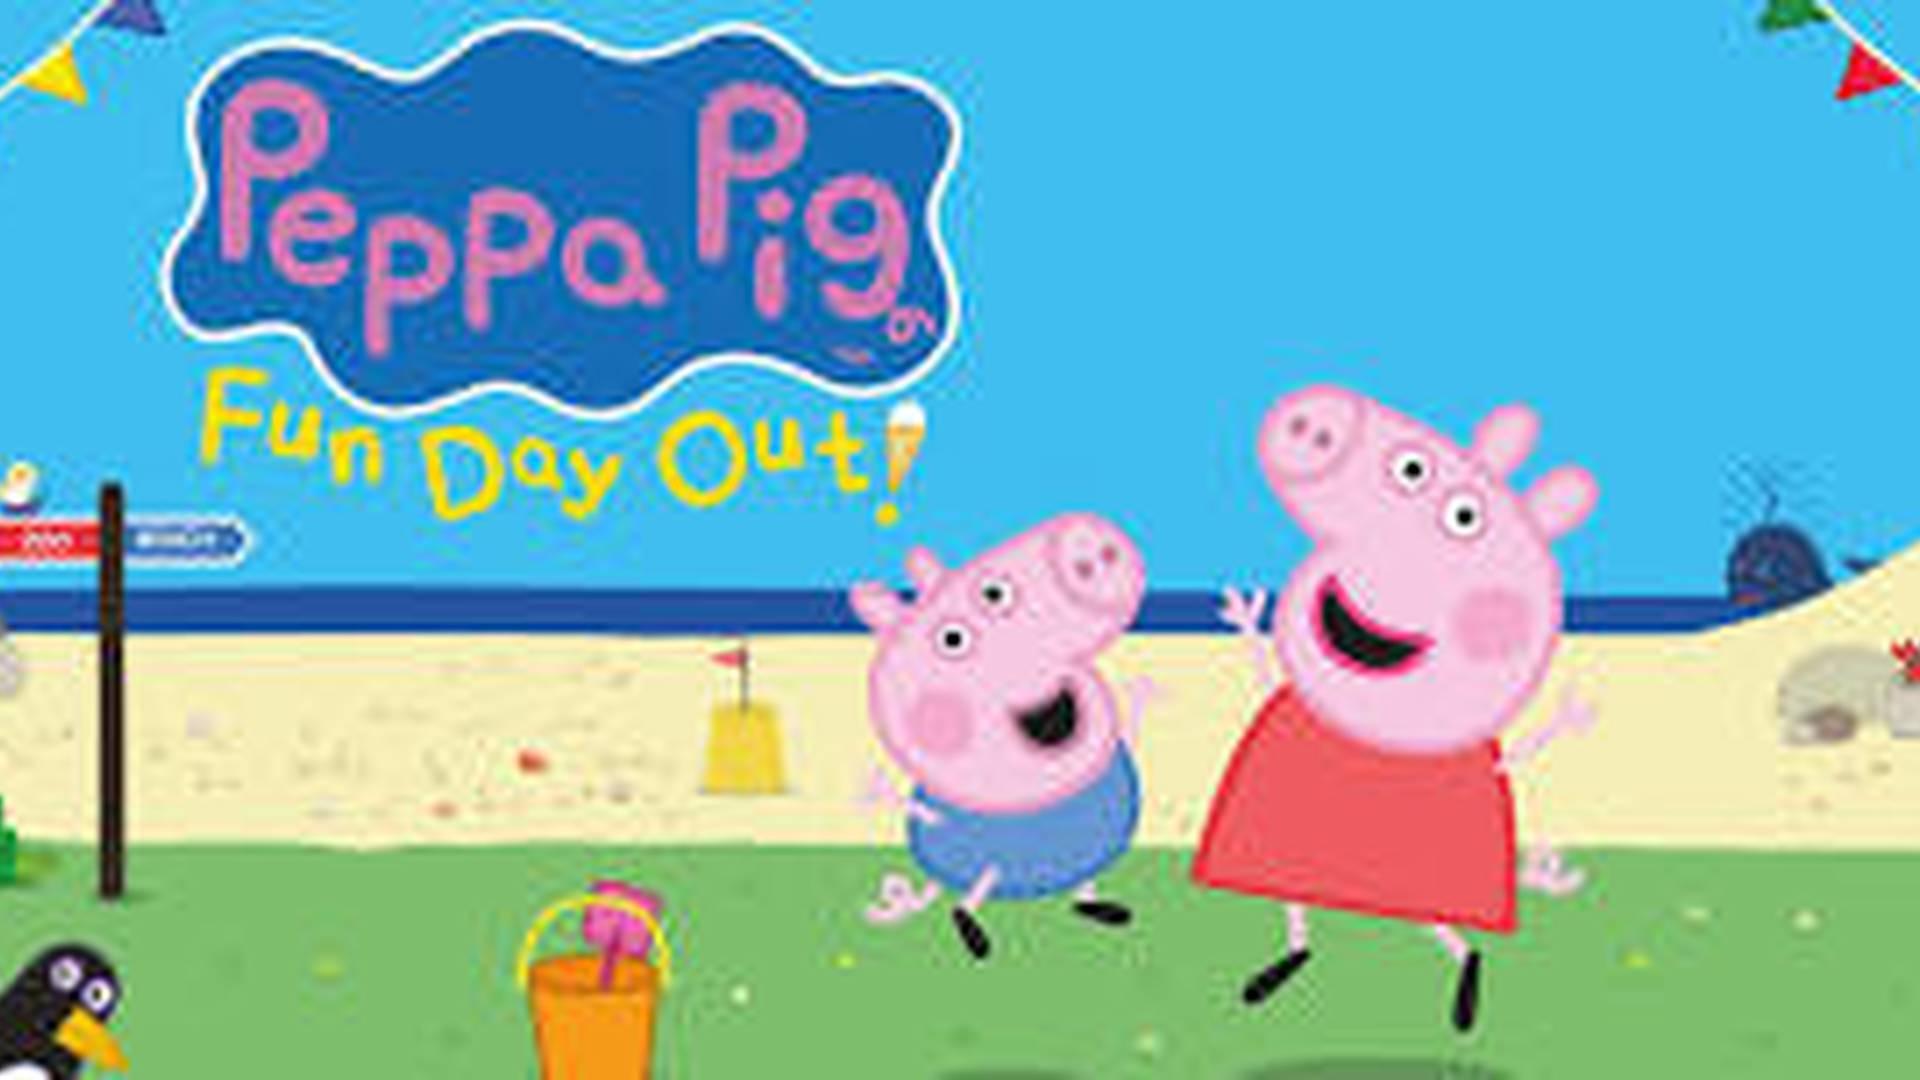 Peppa Pig Live photo